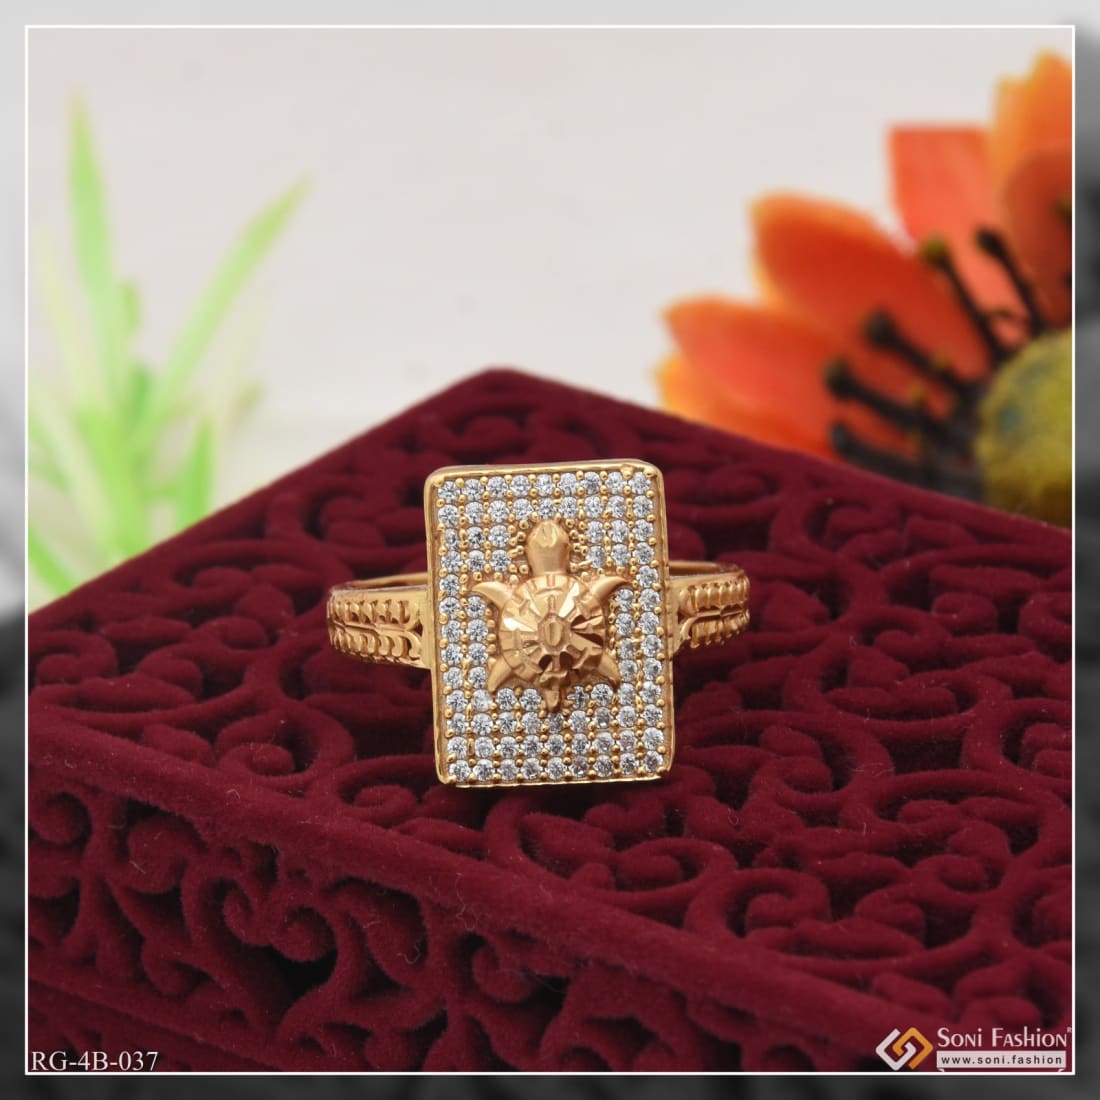 Buy 22Kt Gold Kachua Ring For Men 97VM2822 Online from Vaibhav Jewellers